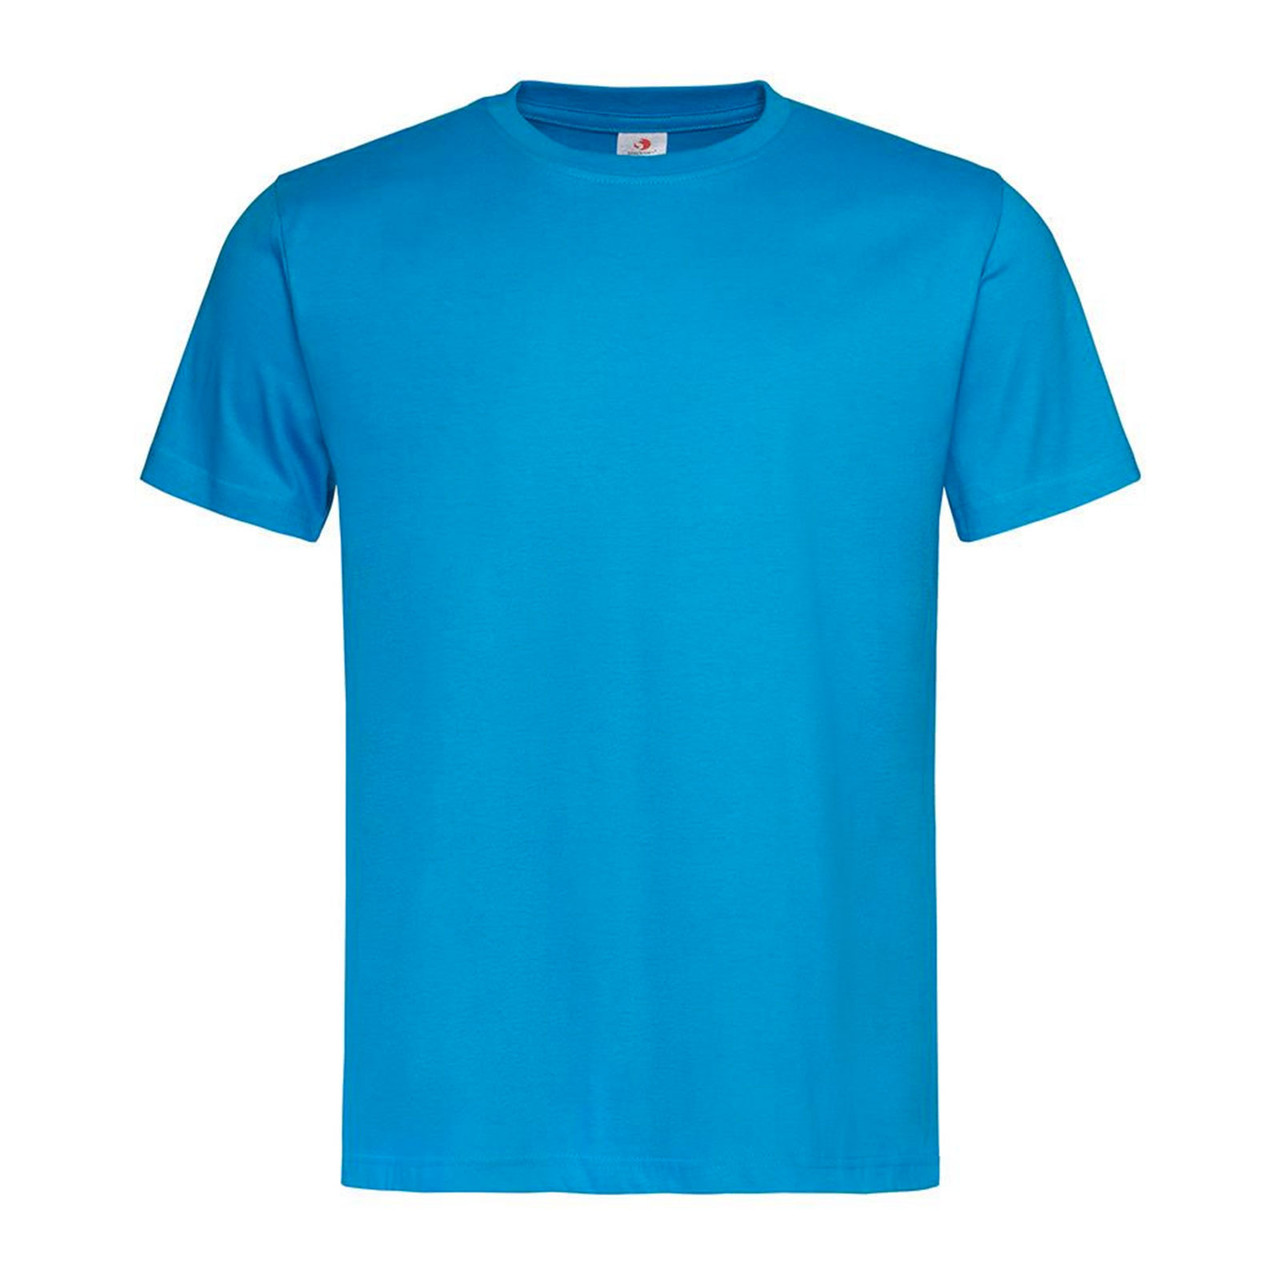 DALLAS | t-shirts men | tubular eco classic | Plain T Shirts ...